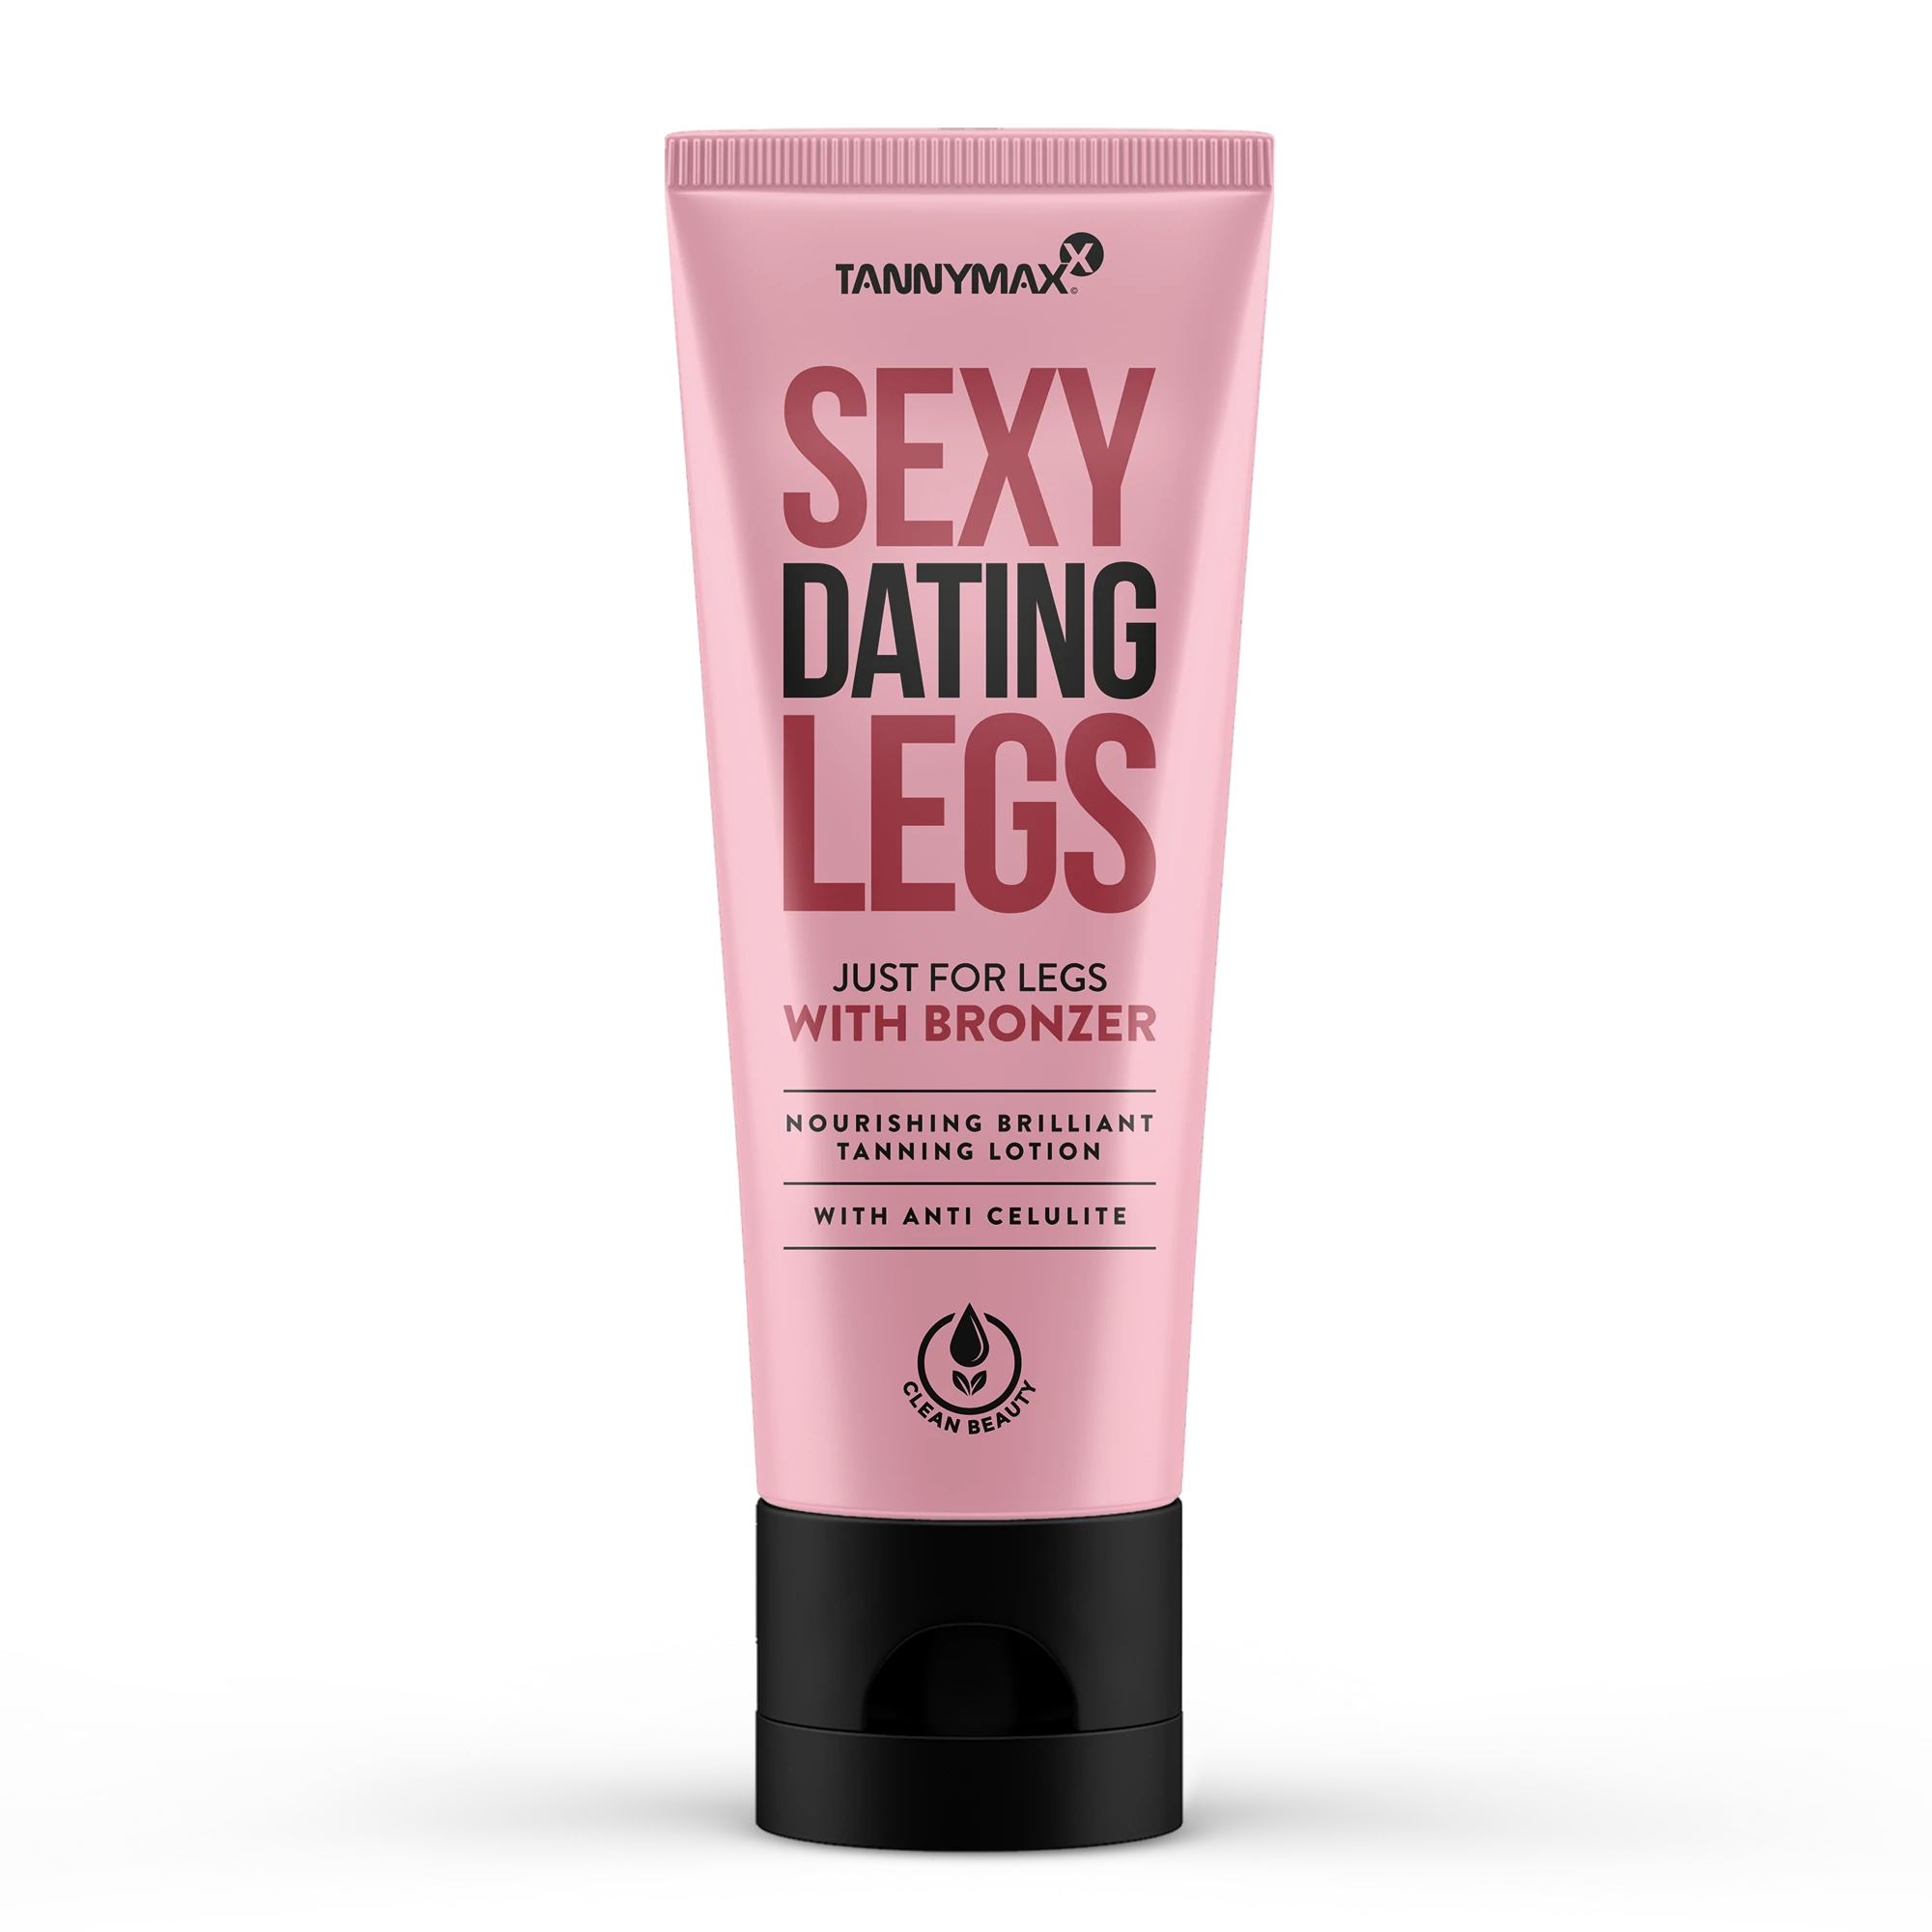 Tannymaxx Sexy Datings Legs Bronzer  150 ml  NEW